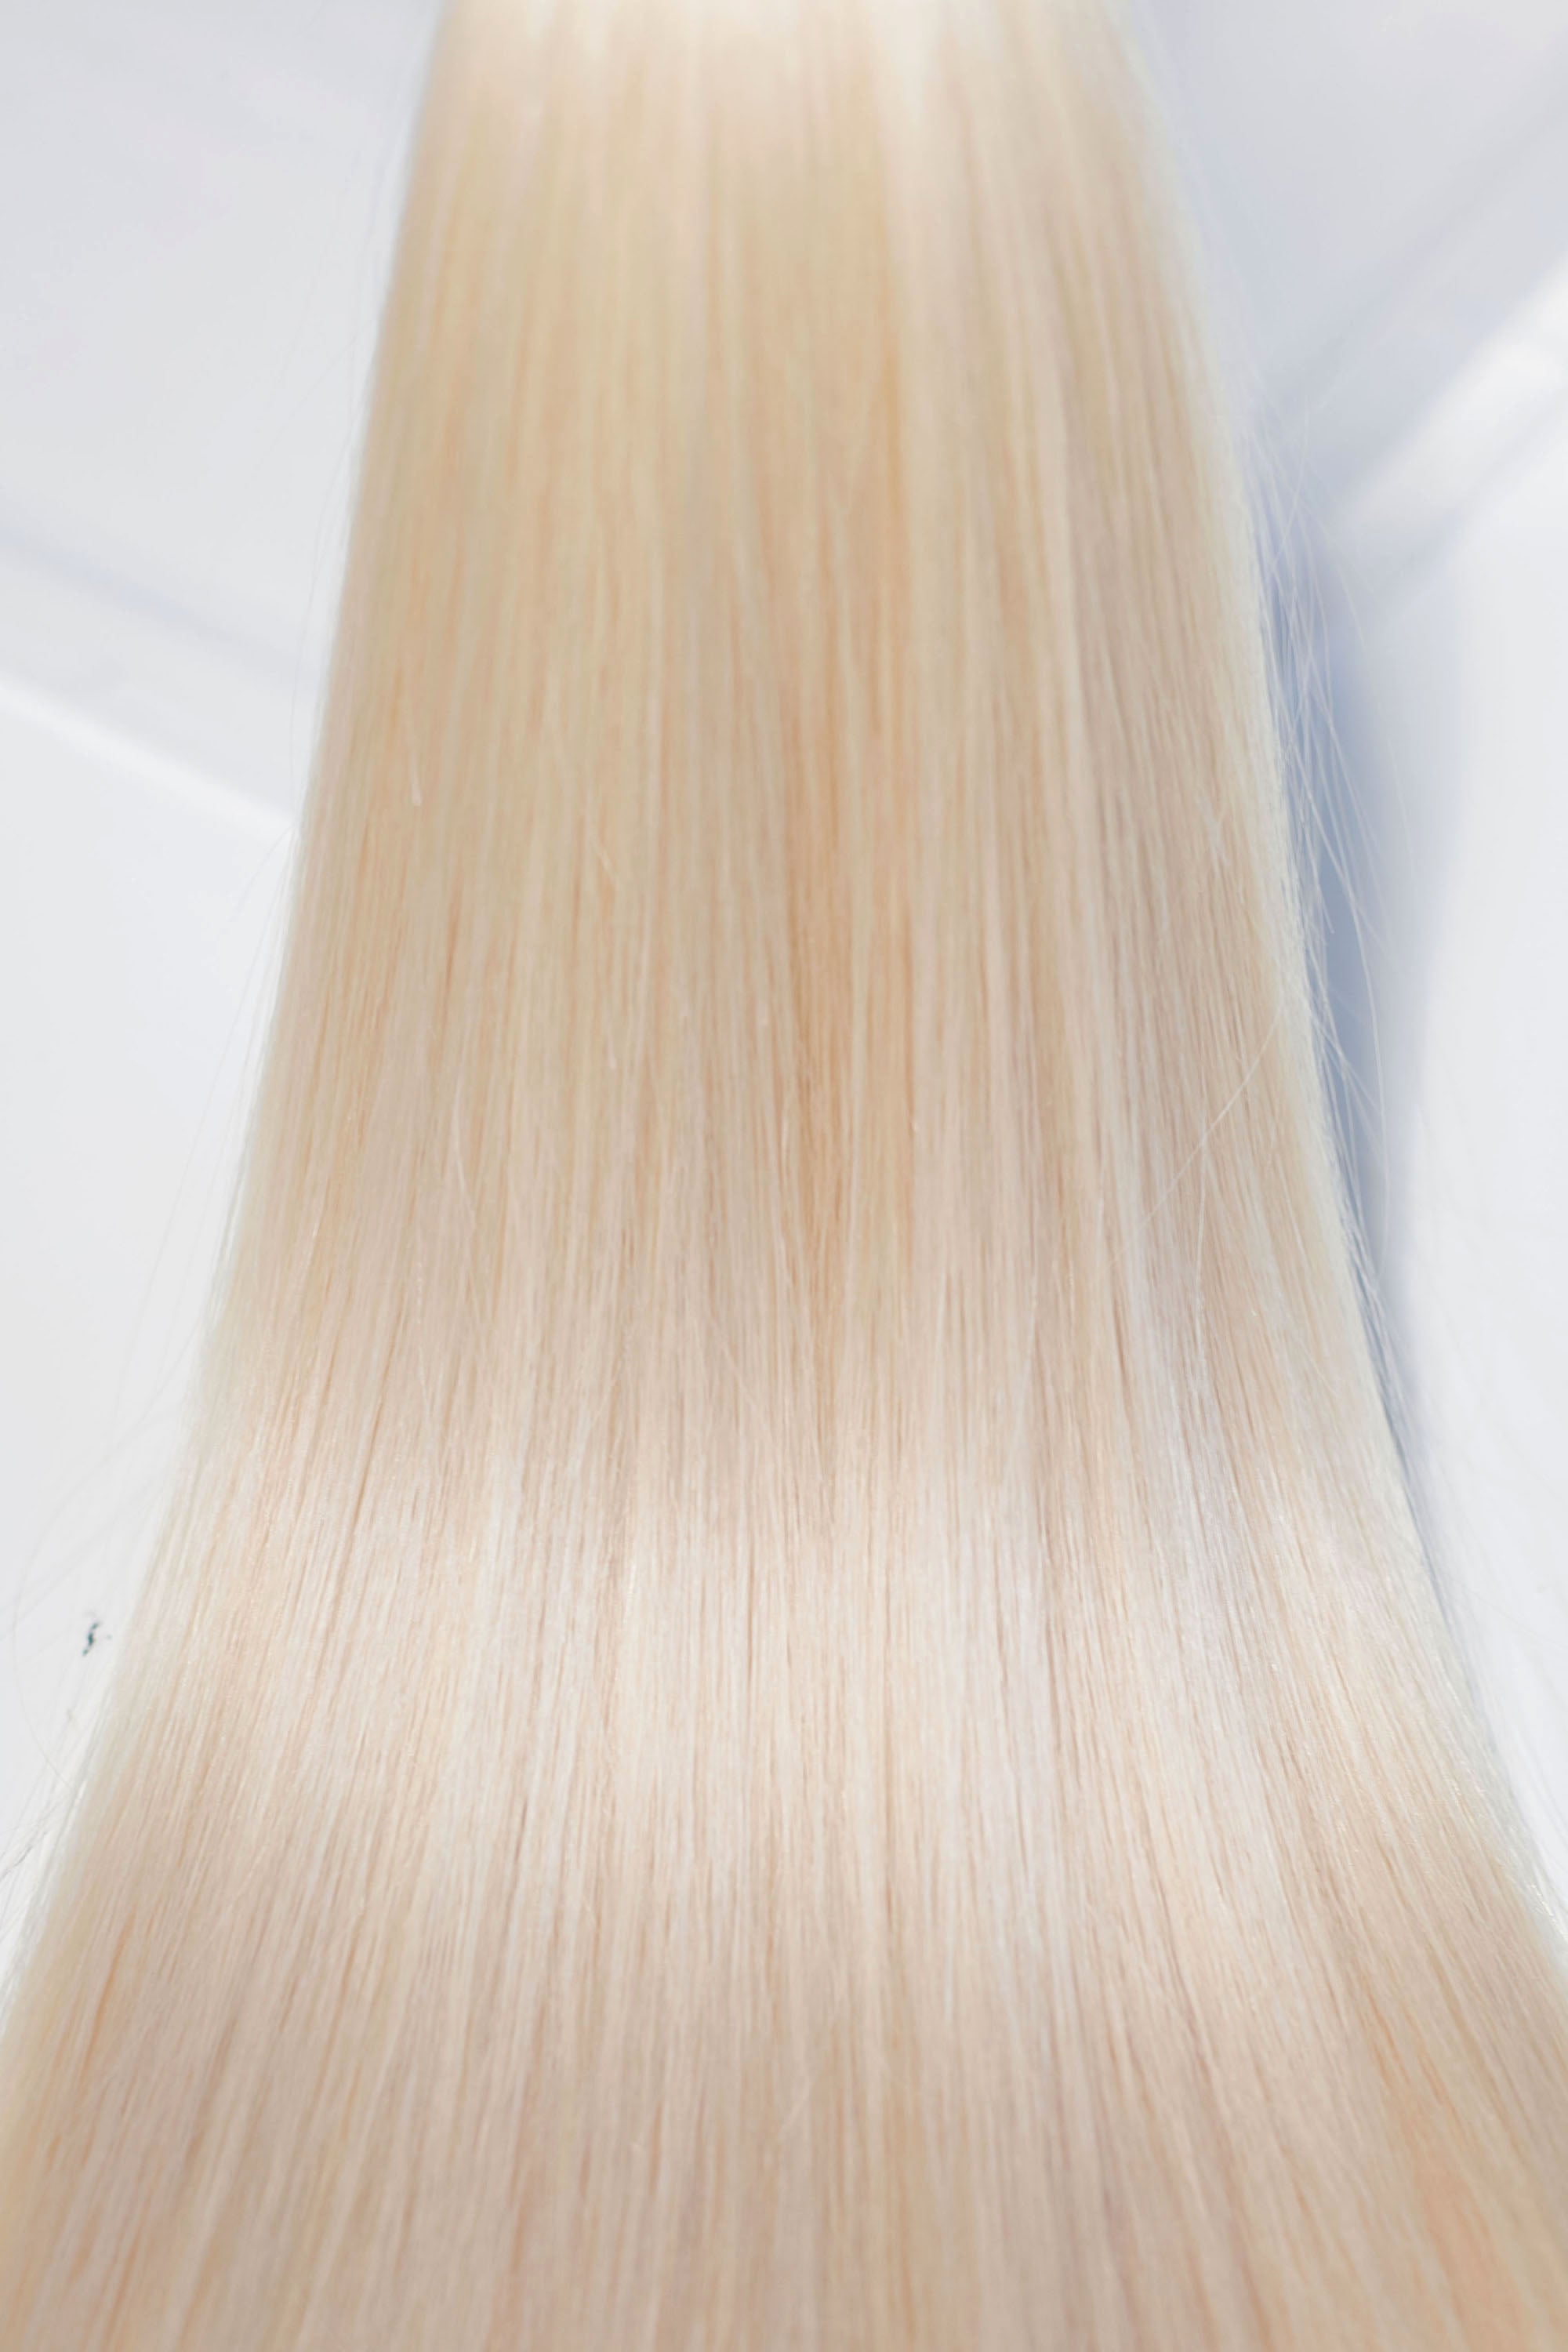 Behair professional Bulk hair "Premium" 18" (45cm) Natural Straight Ice Blond #000 - 25g hair extensions